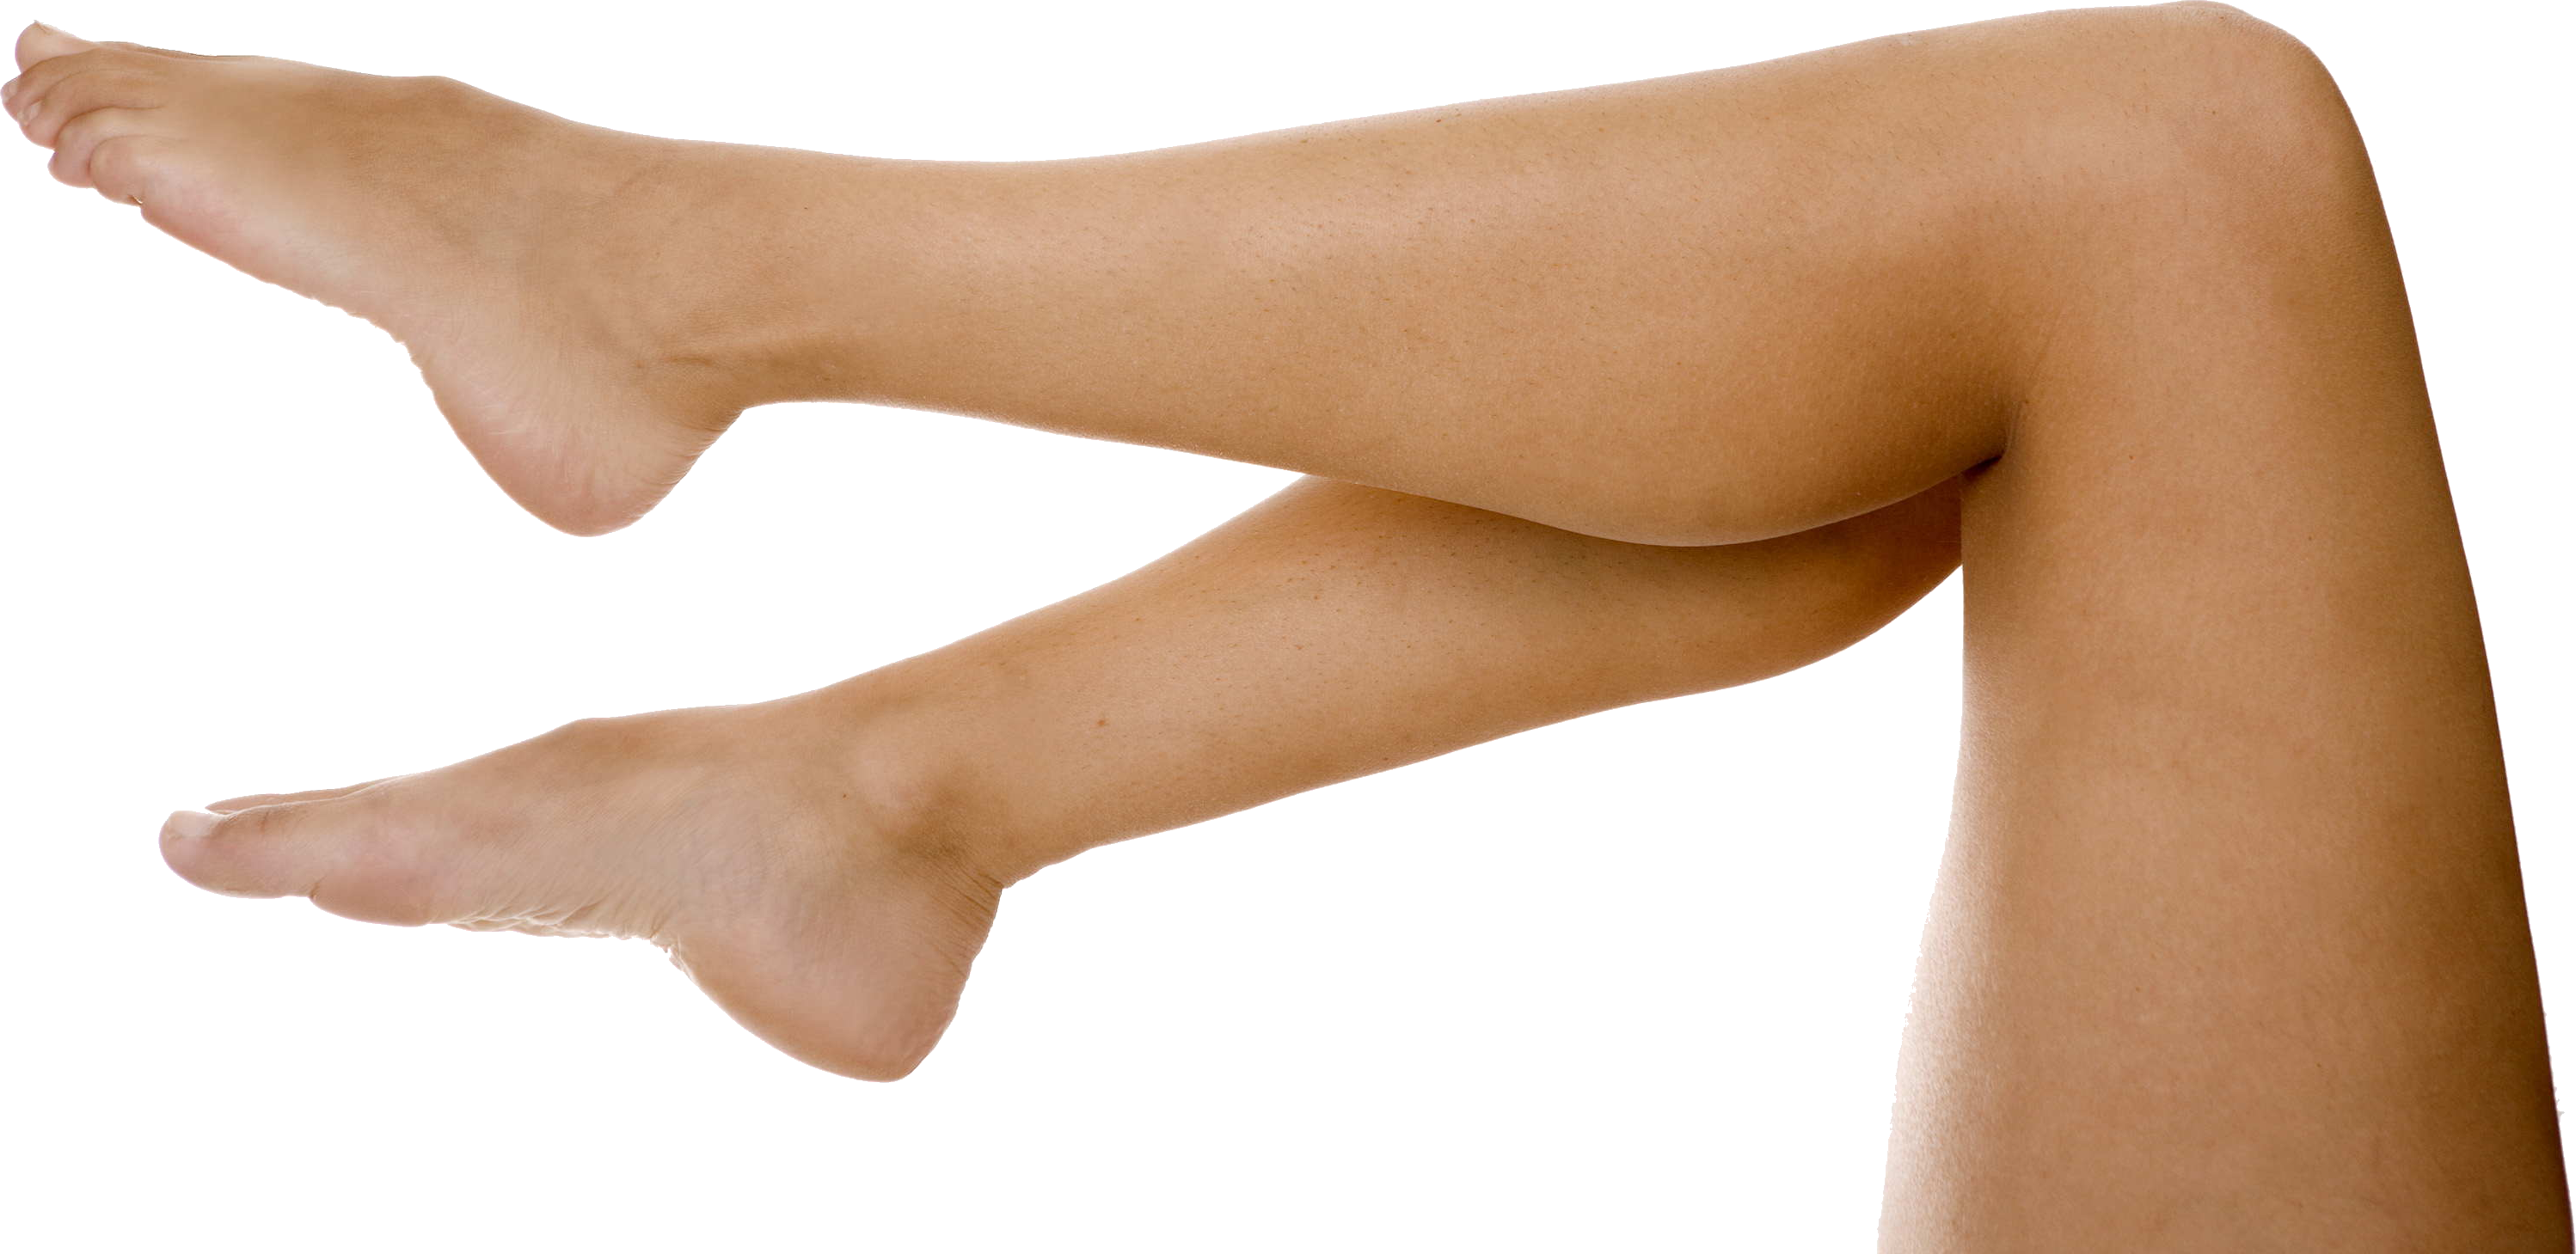 legs clipart muscle leg